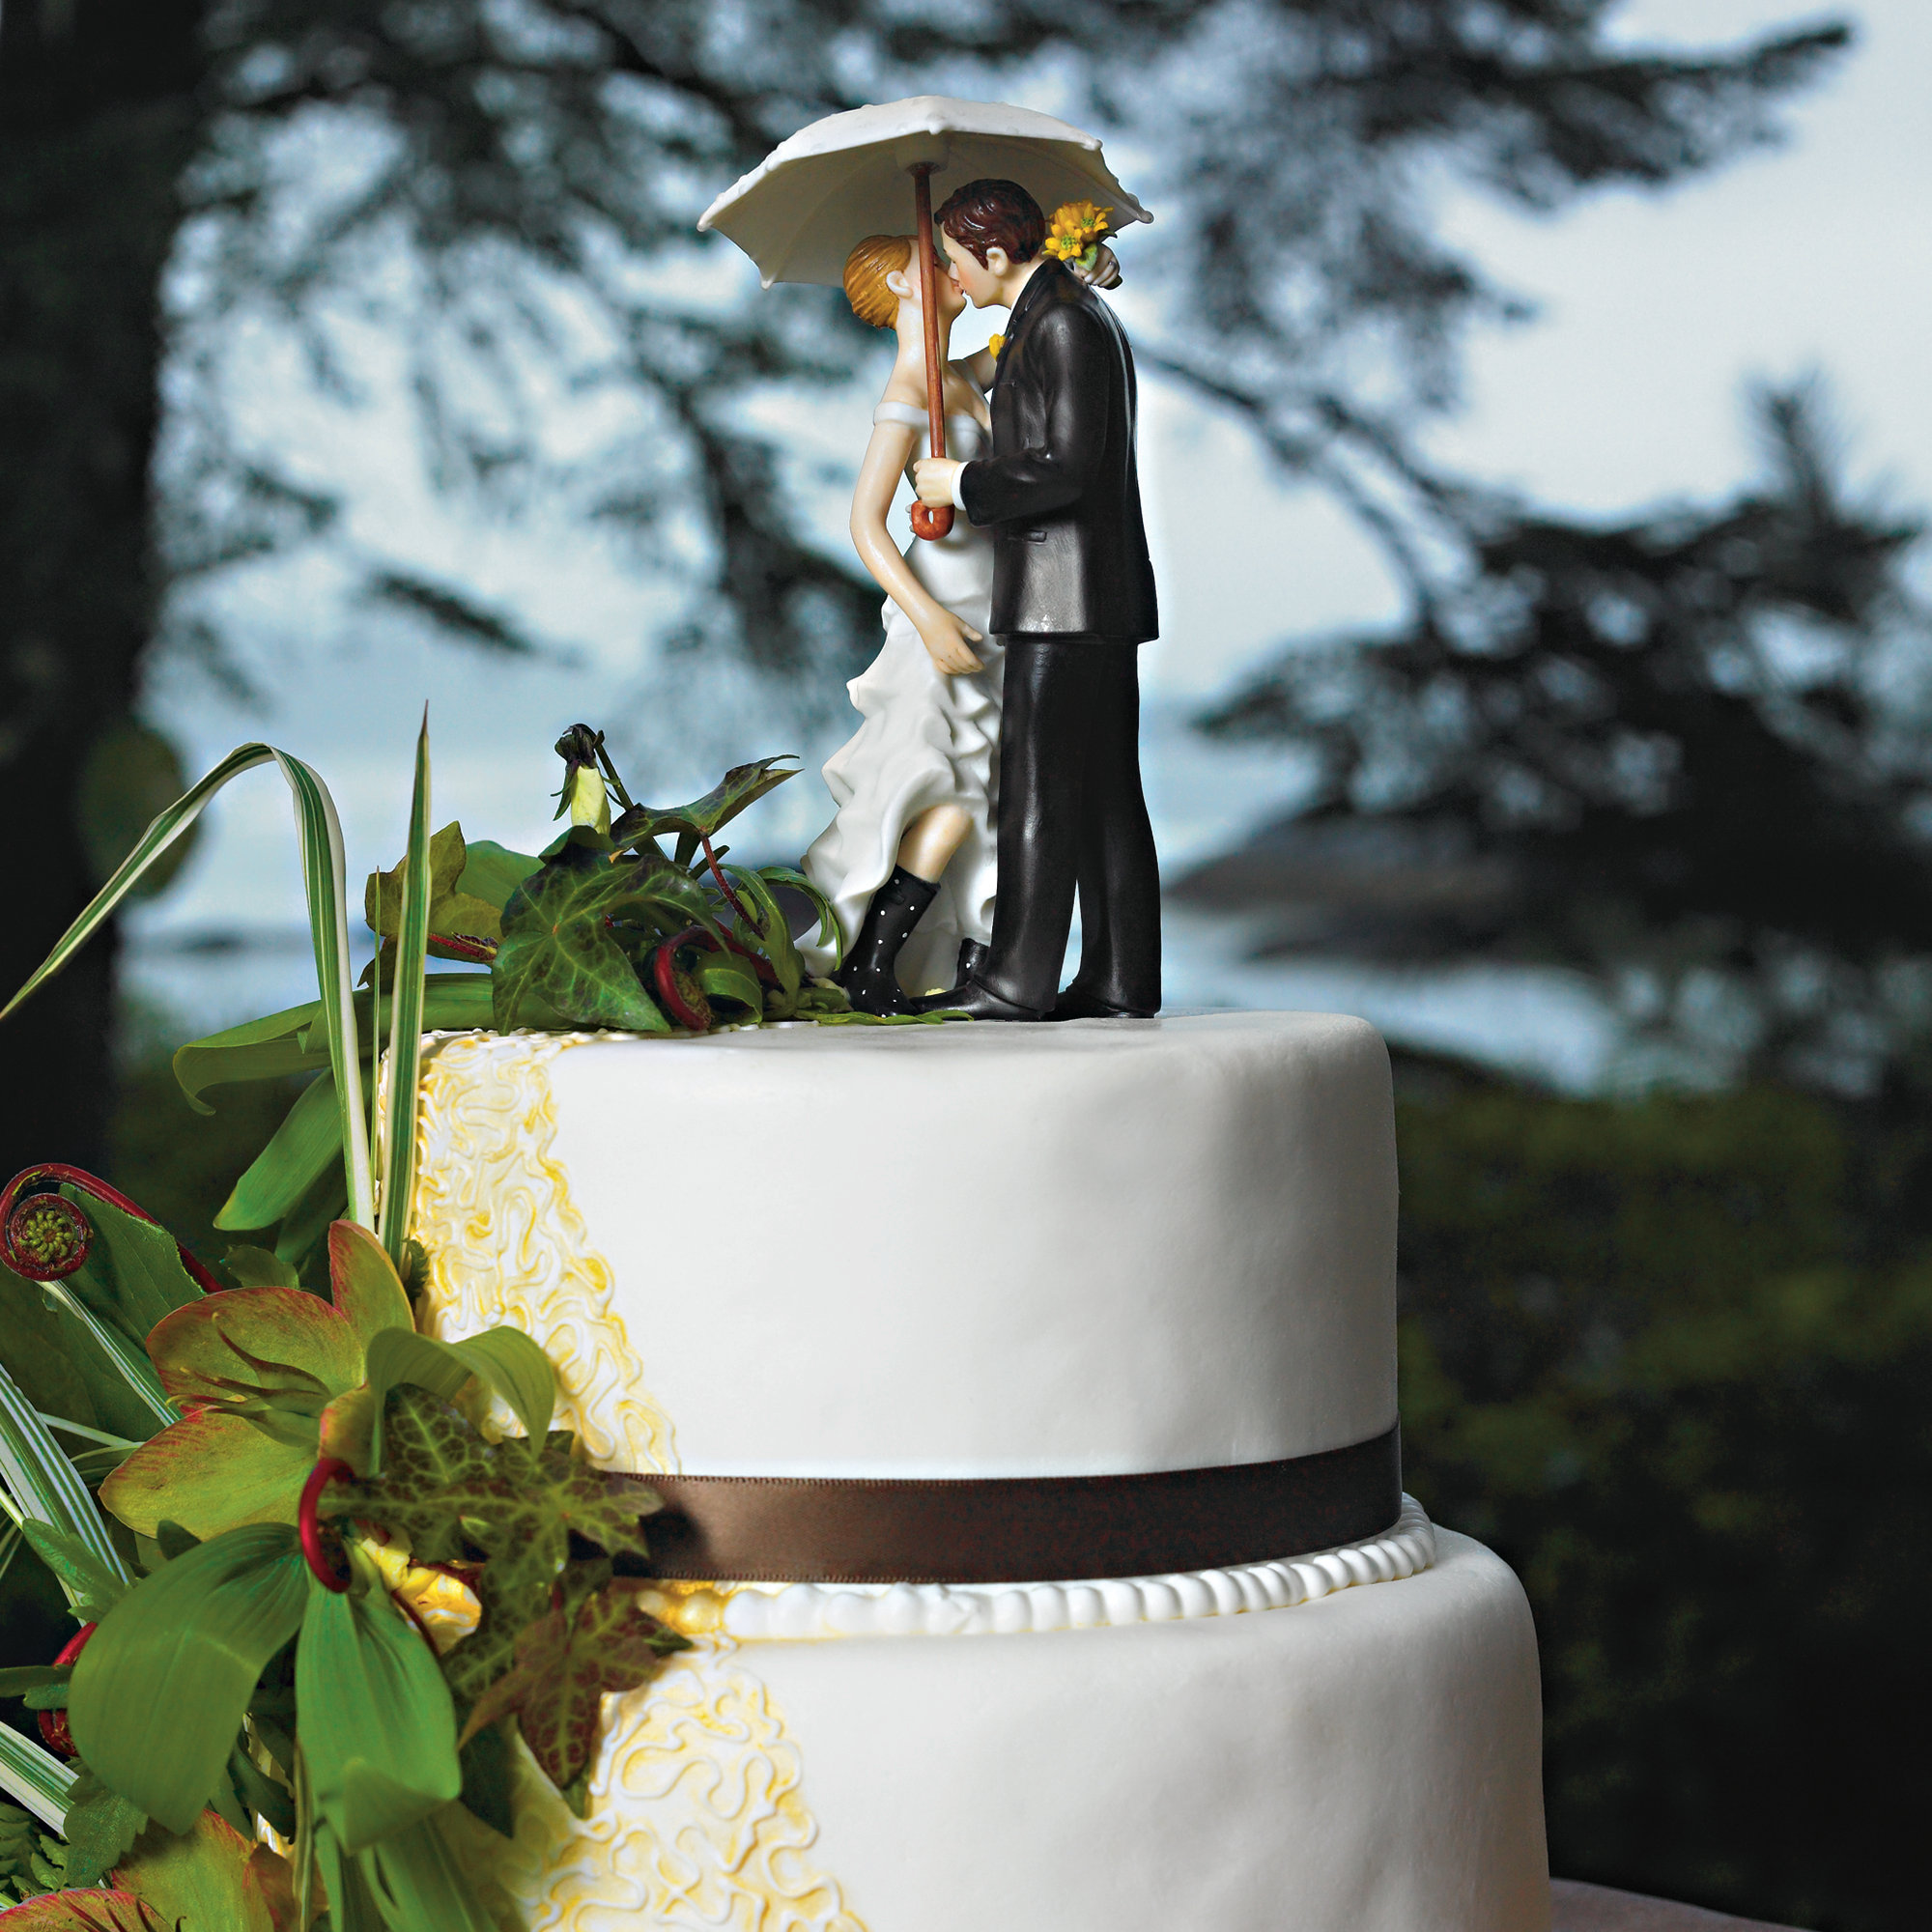 Disney wedding cake topper by Lenox Stock Photo | Adobe Stock